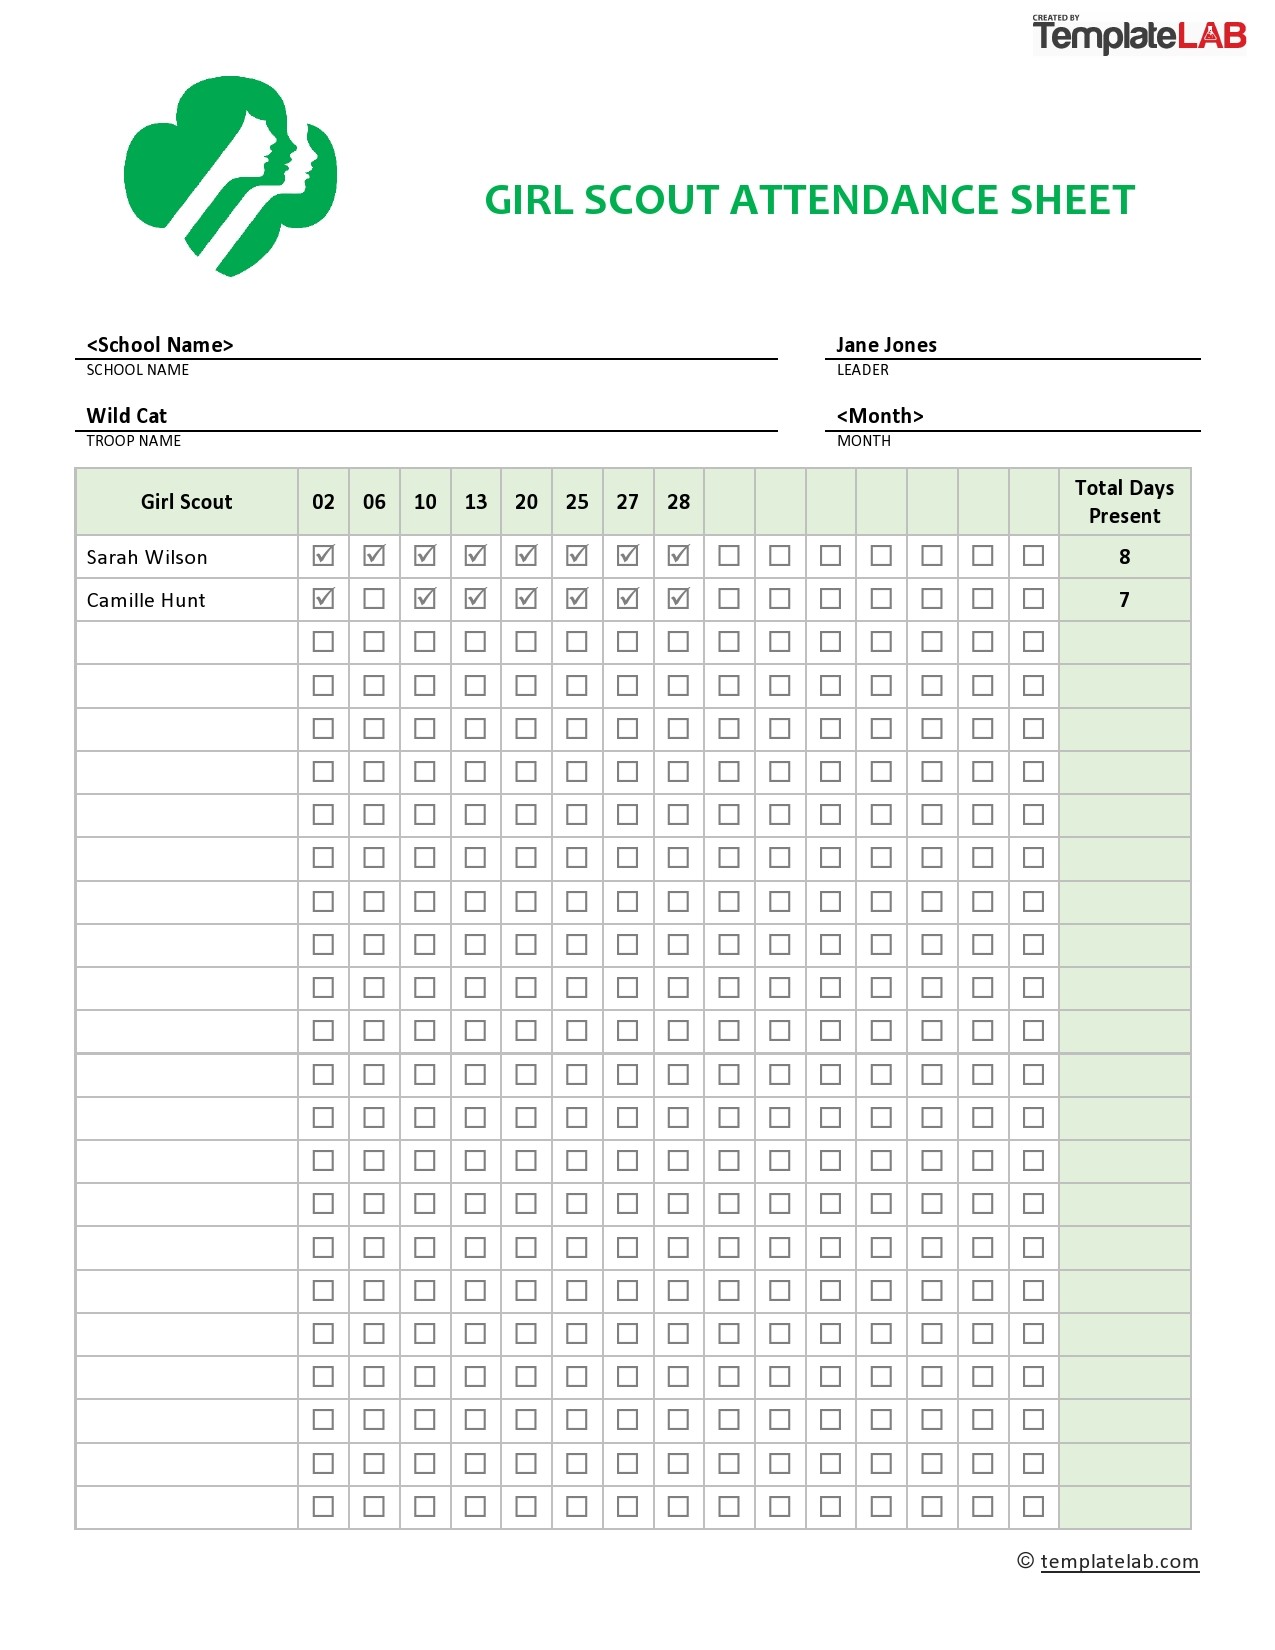 Free Girl Scout Attendance Sheet  - TemplateLab.com